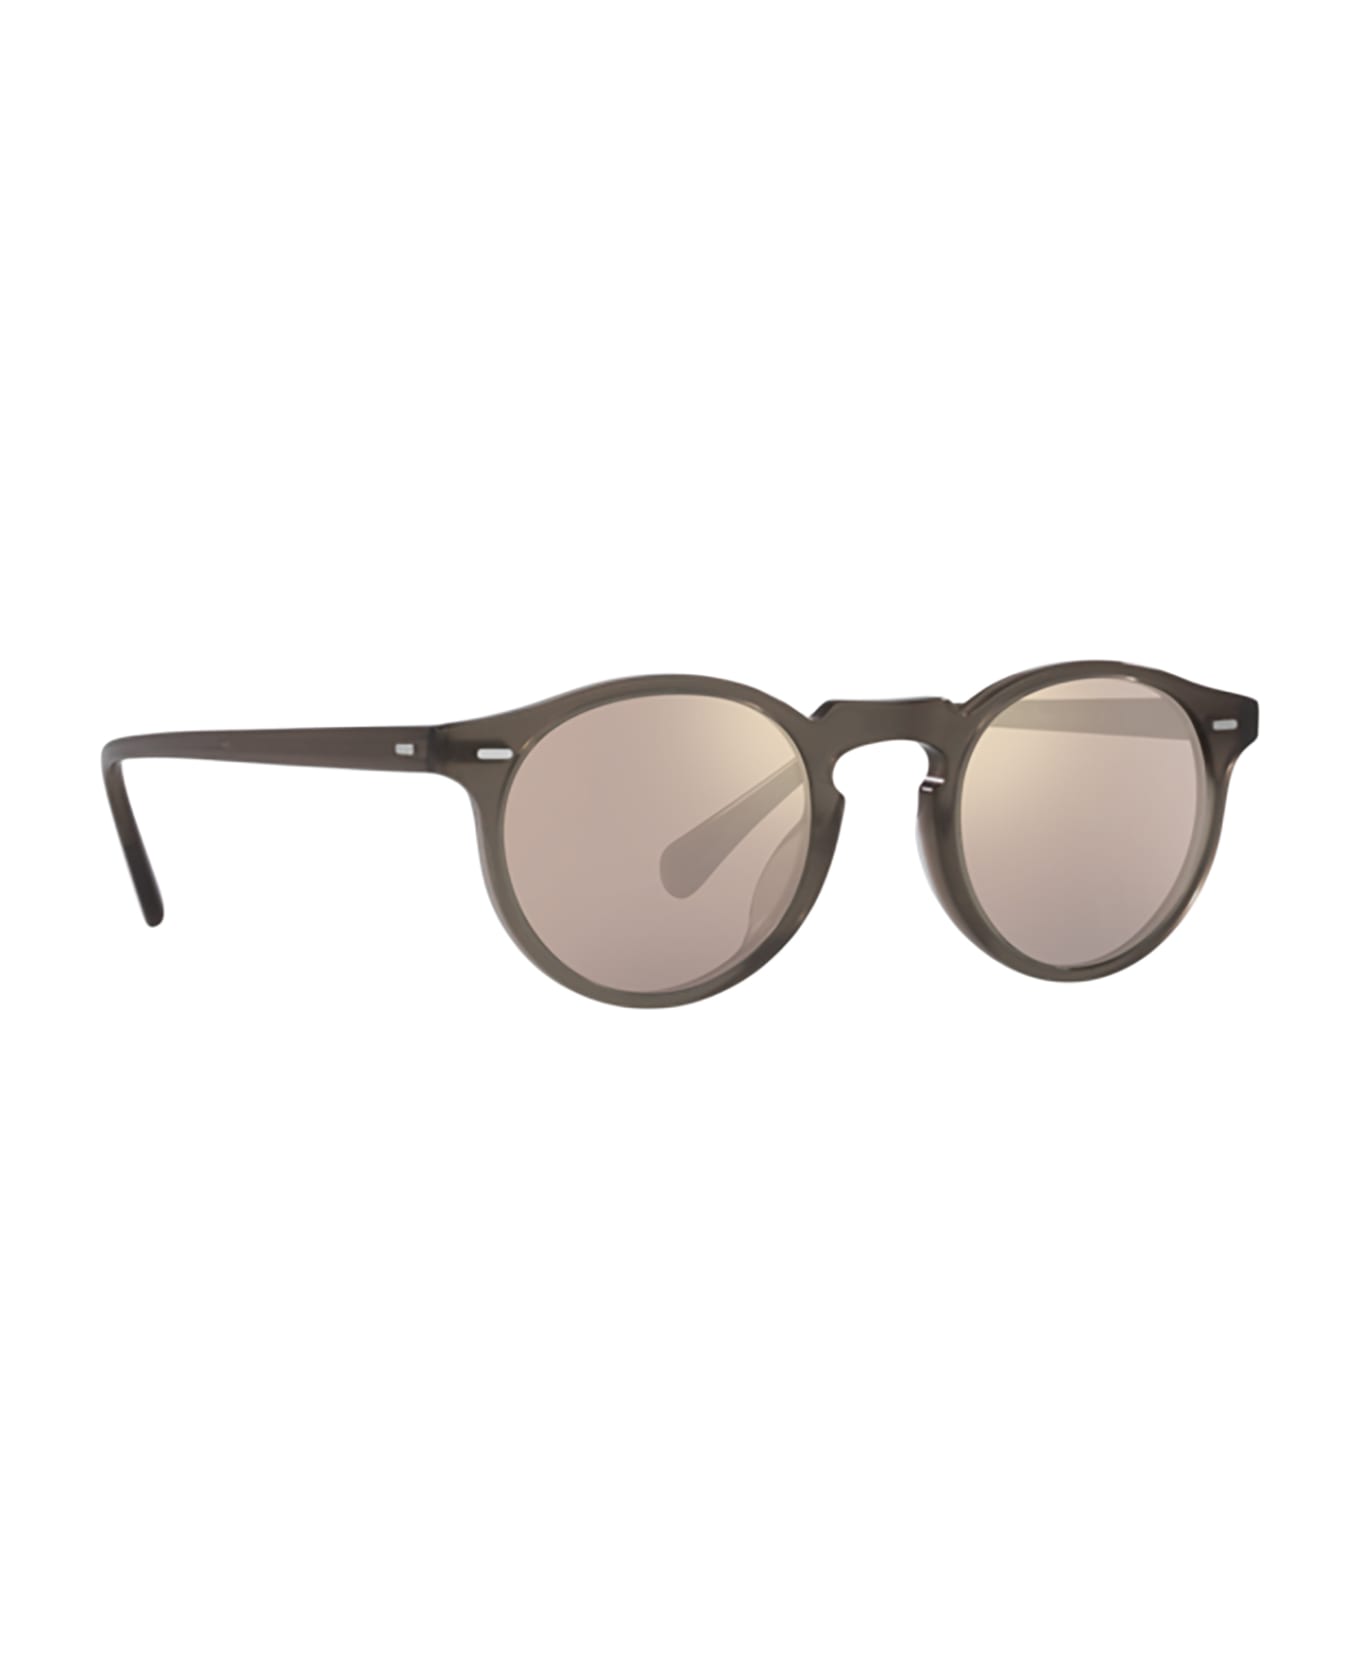 Oliver Peoples Ov5217s Taupe Sunglasses - Taupe サングラス